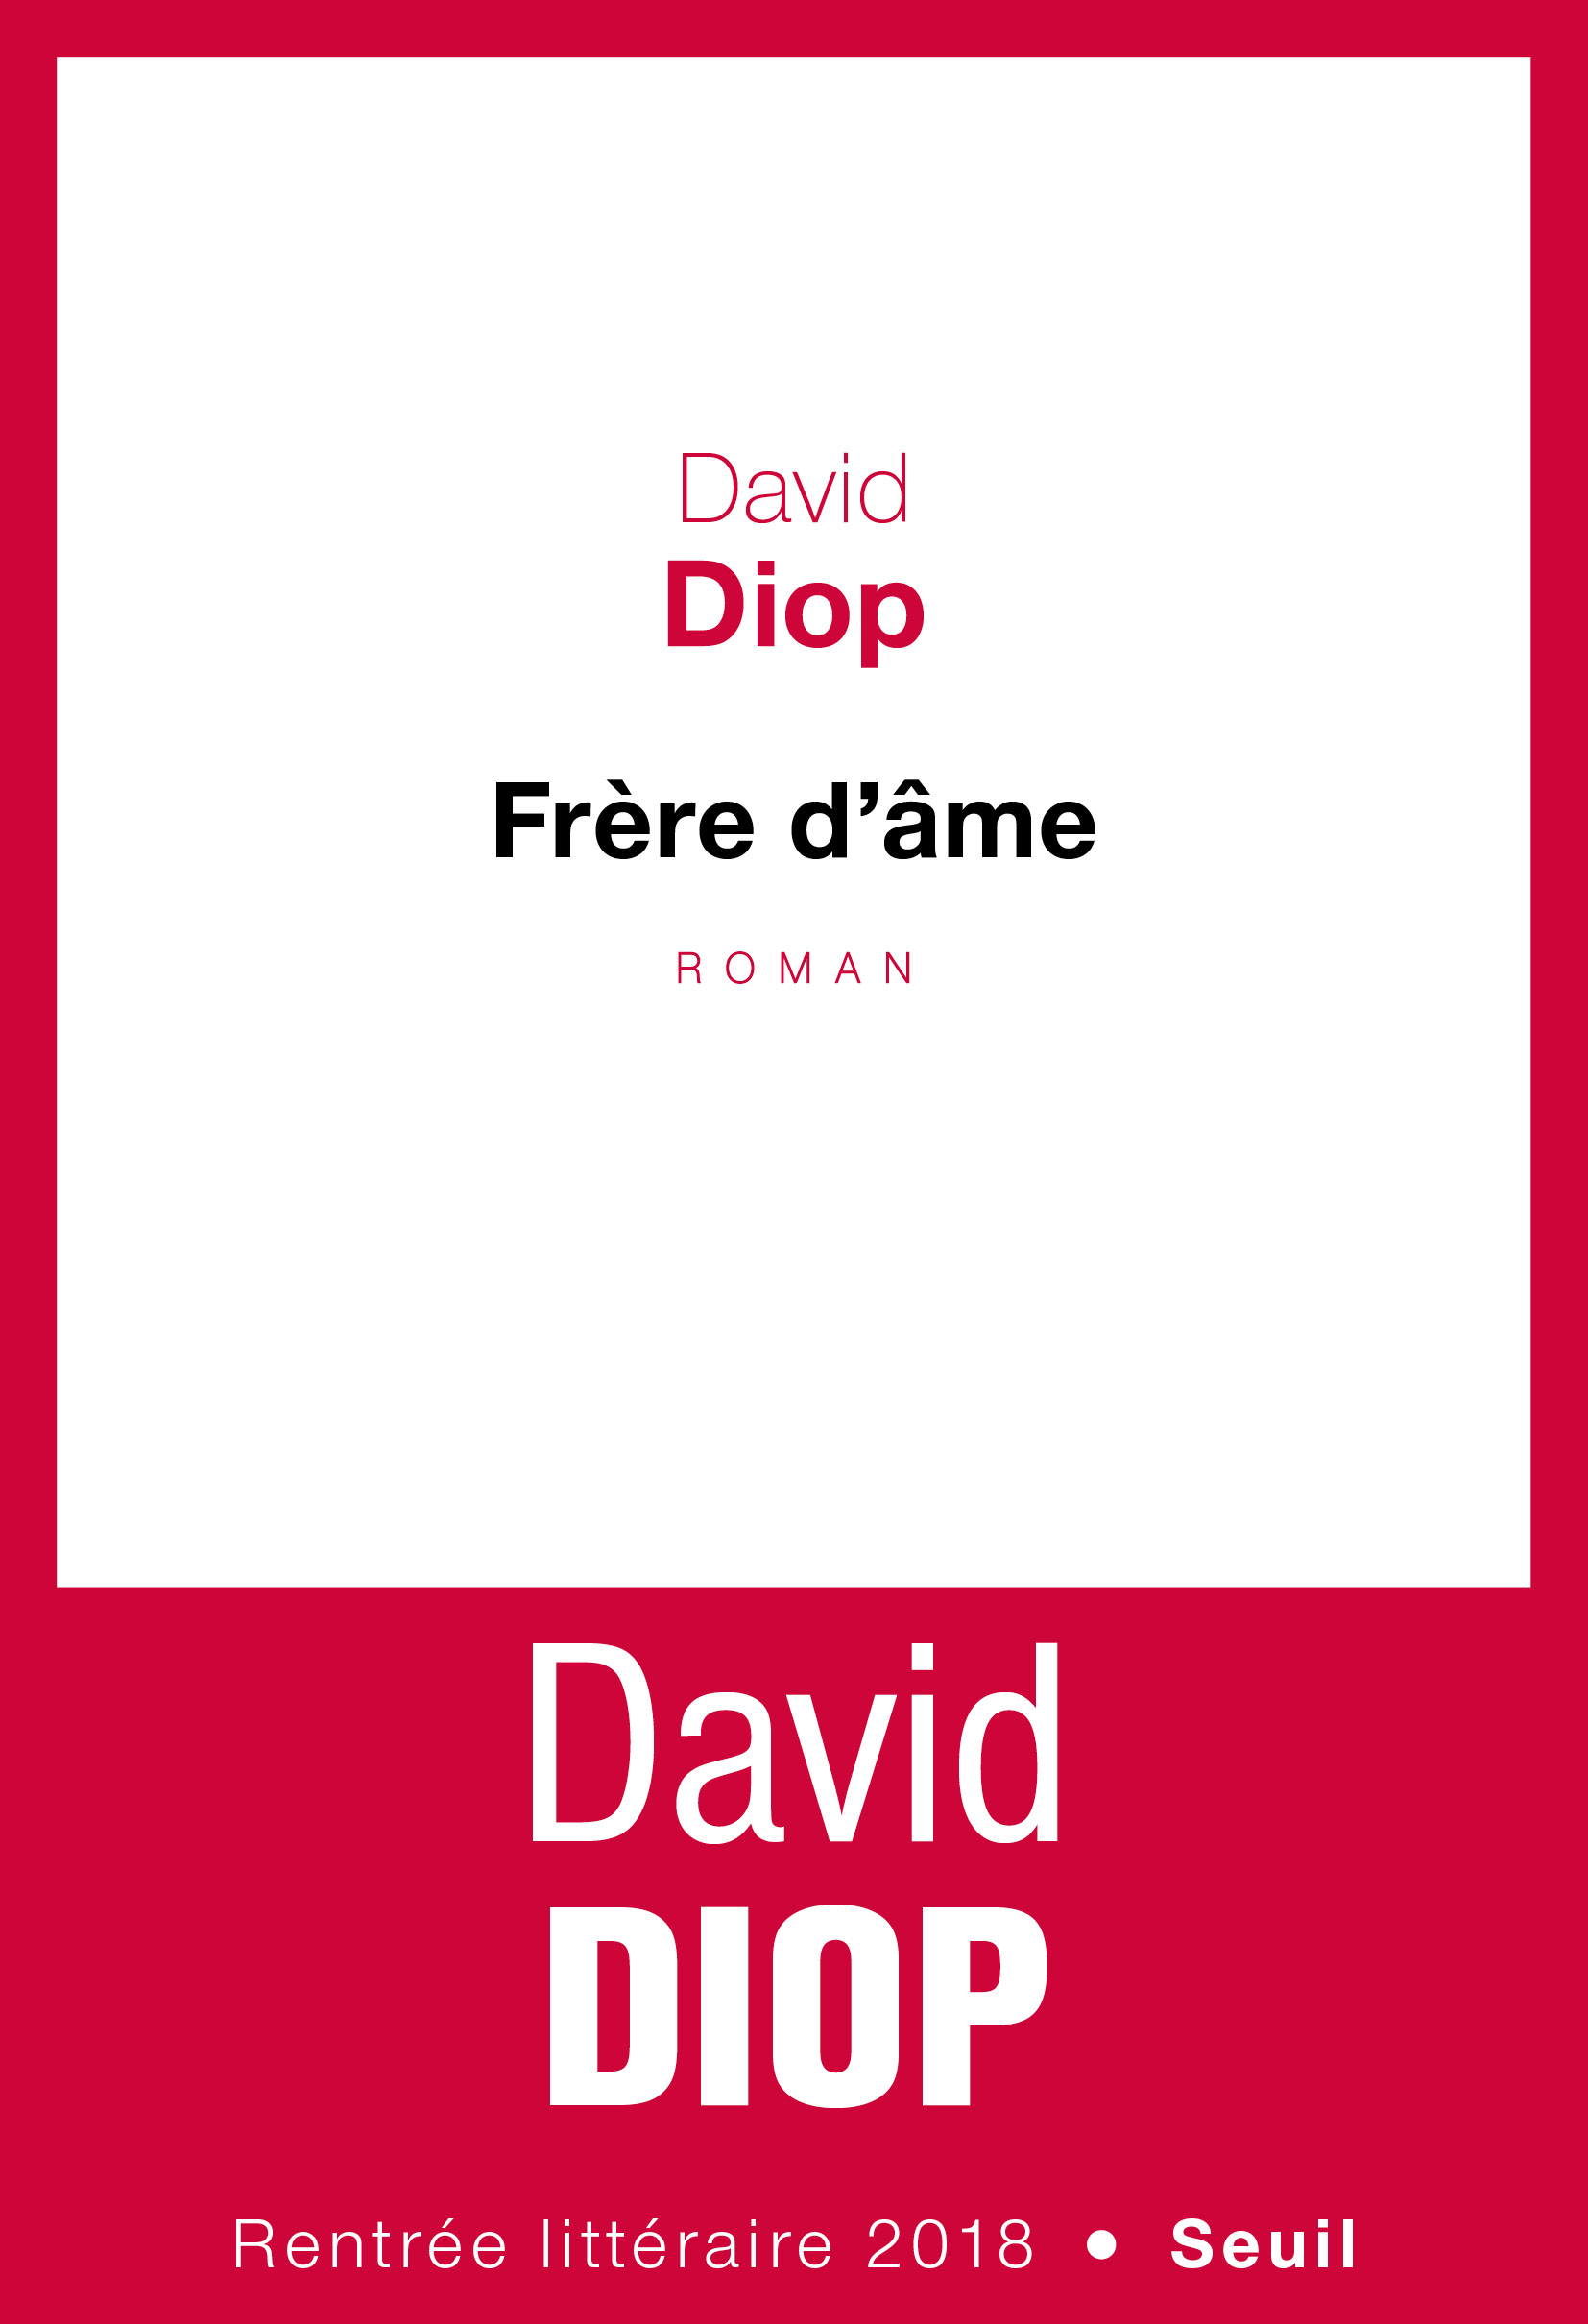 David Diop, "Frère d’âme" 